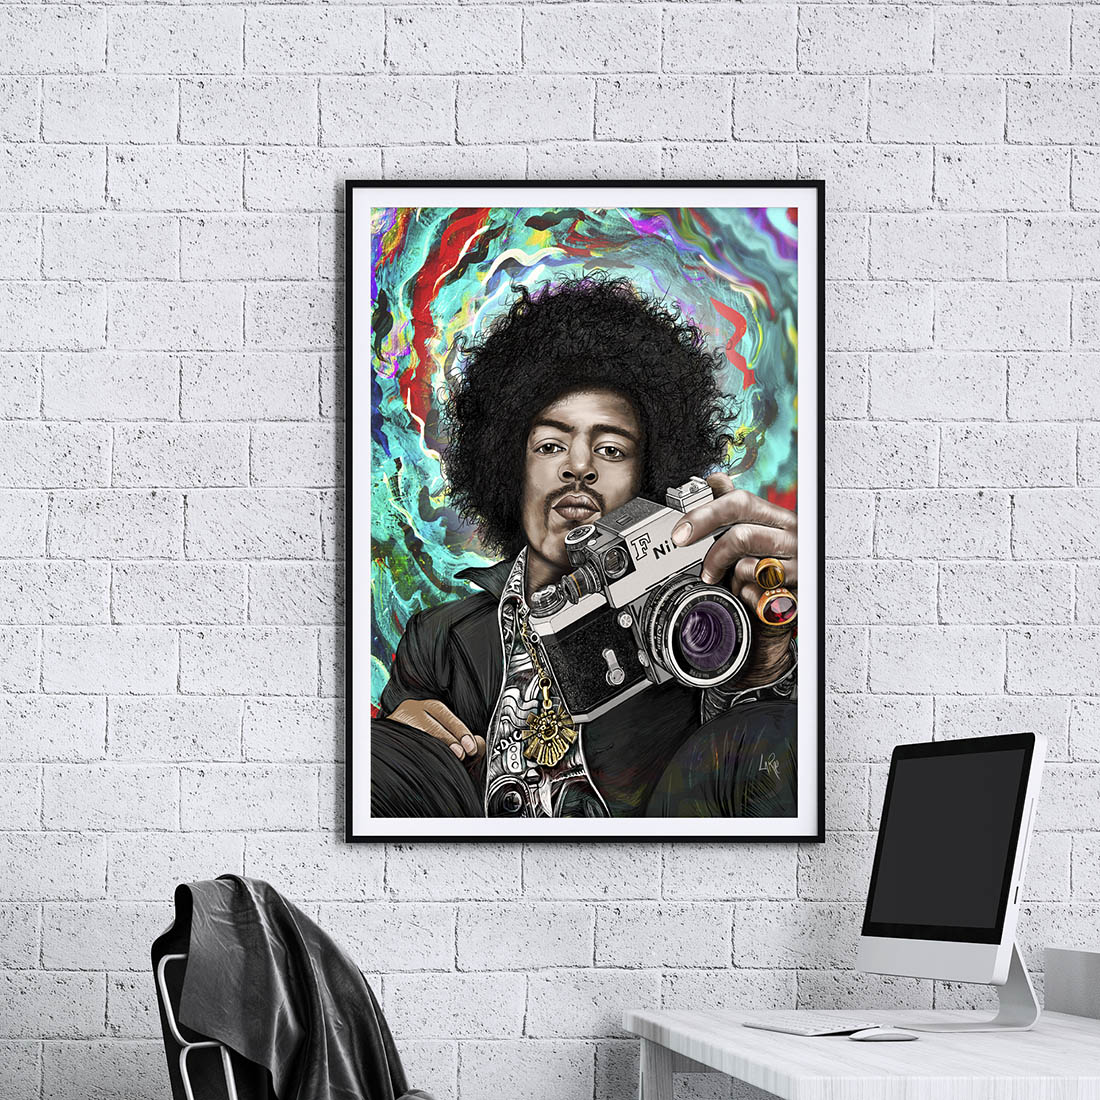 Jimi Hendrix F Photomic mixed media art by Doug LaRue in a black metal frame on a white brick wall